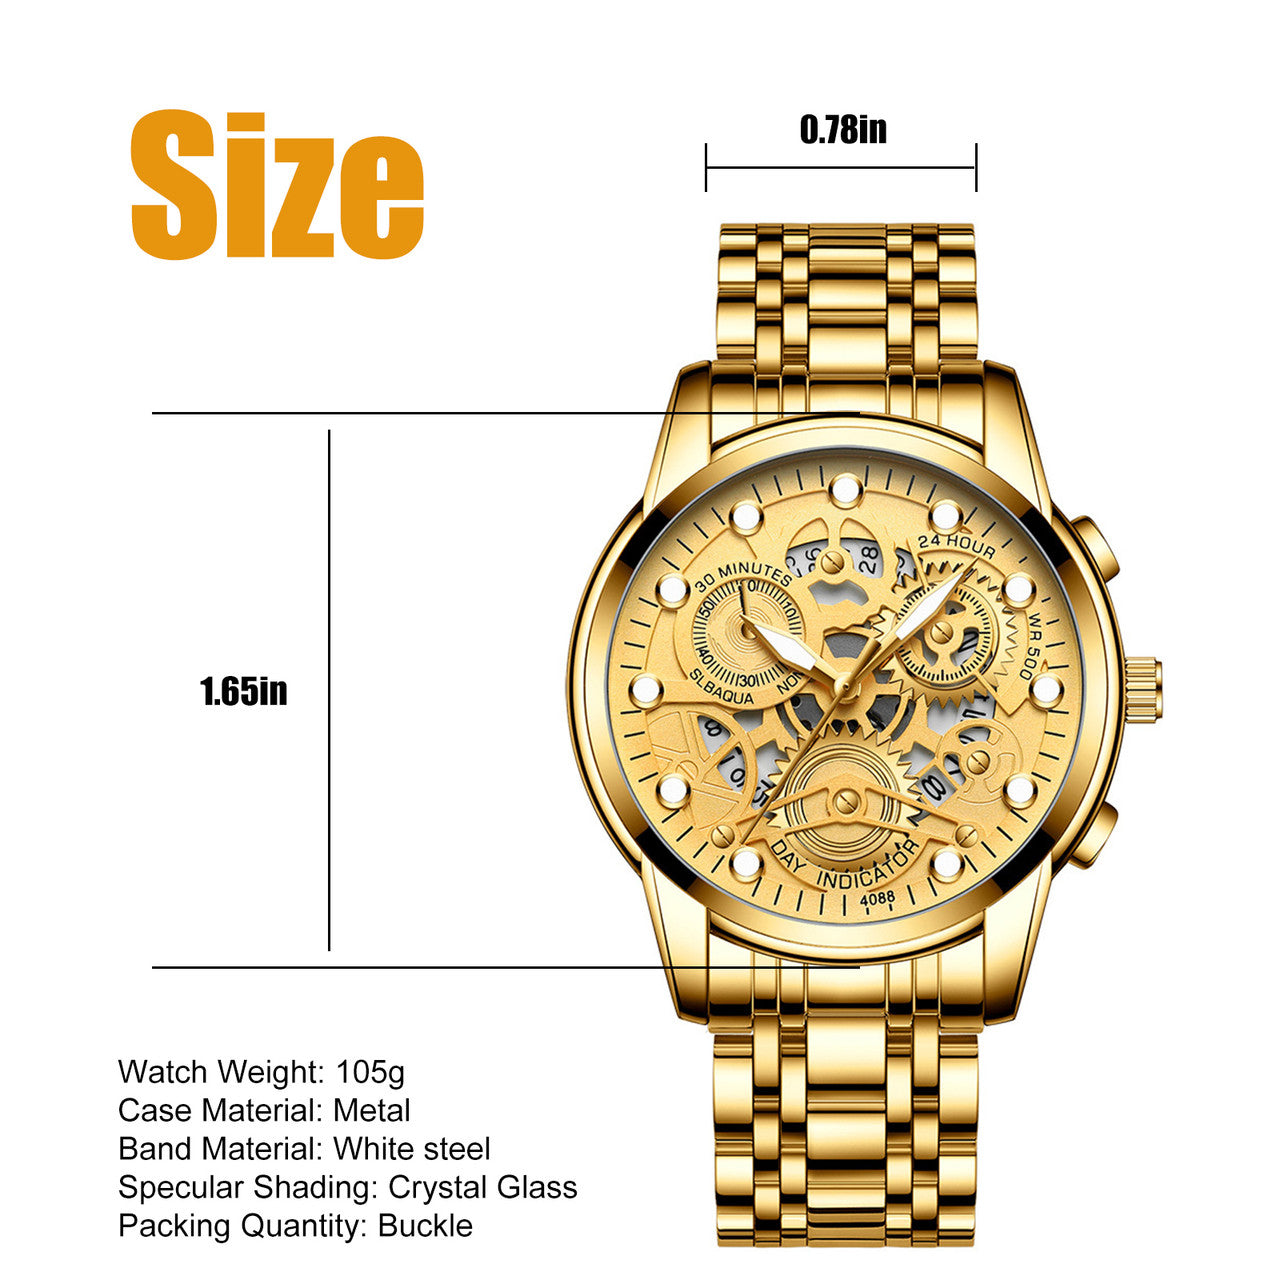 Watches, Mens Full Stainless Steel Watch Luminous Quartz Analog Watch, Fashion Casual Business Dress Wristwatch for Men, 30M Waterproof Clock, Gold